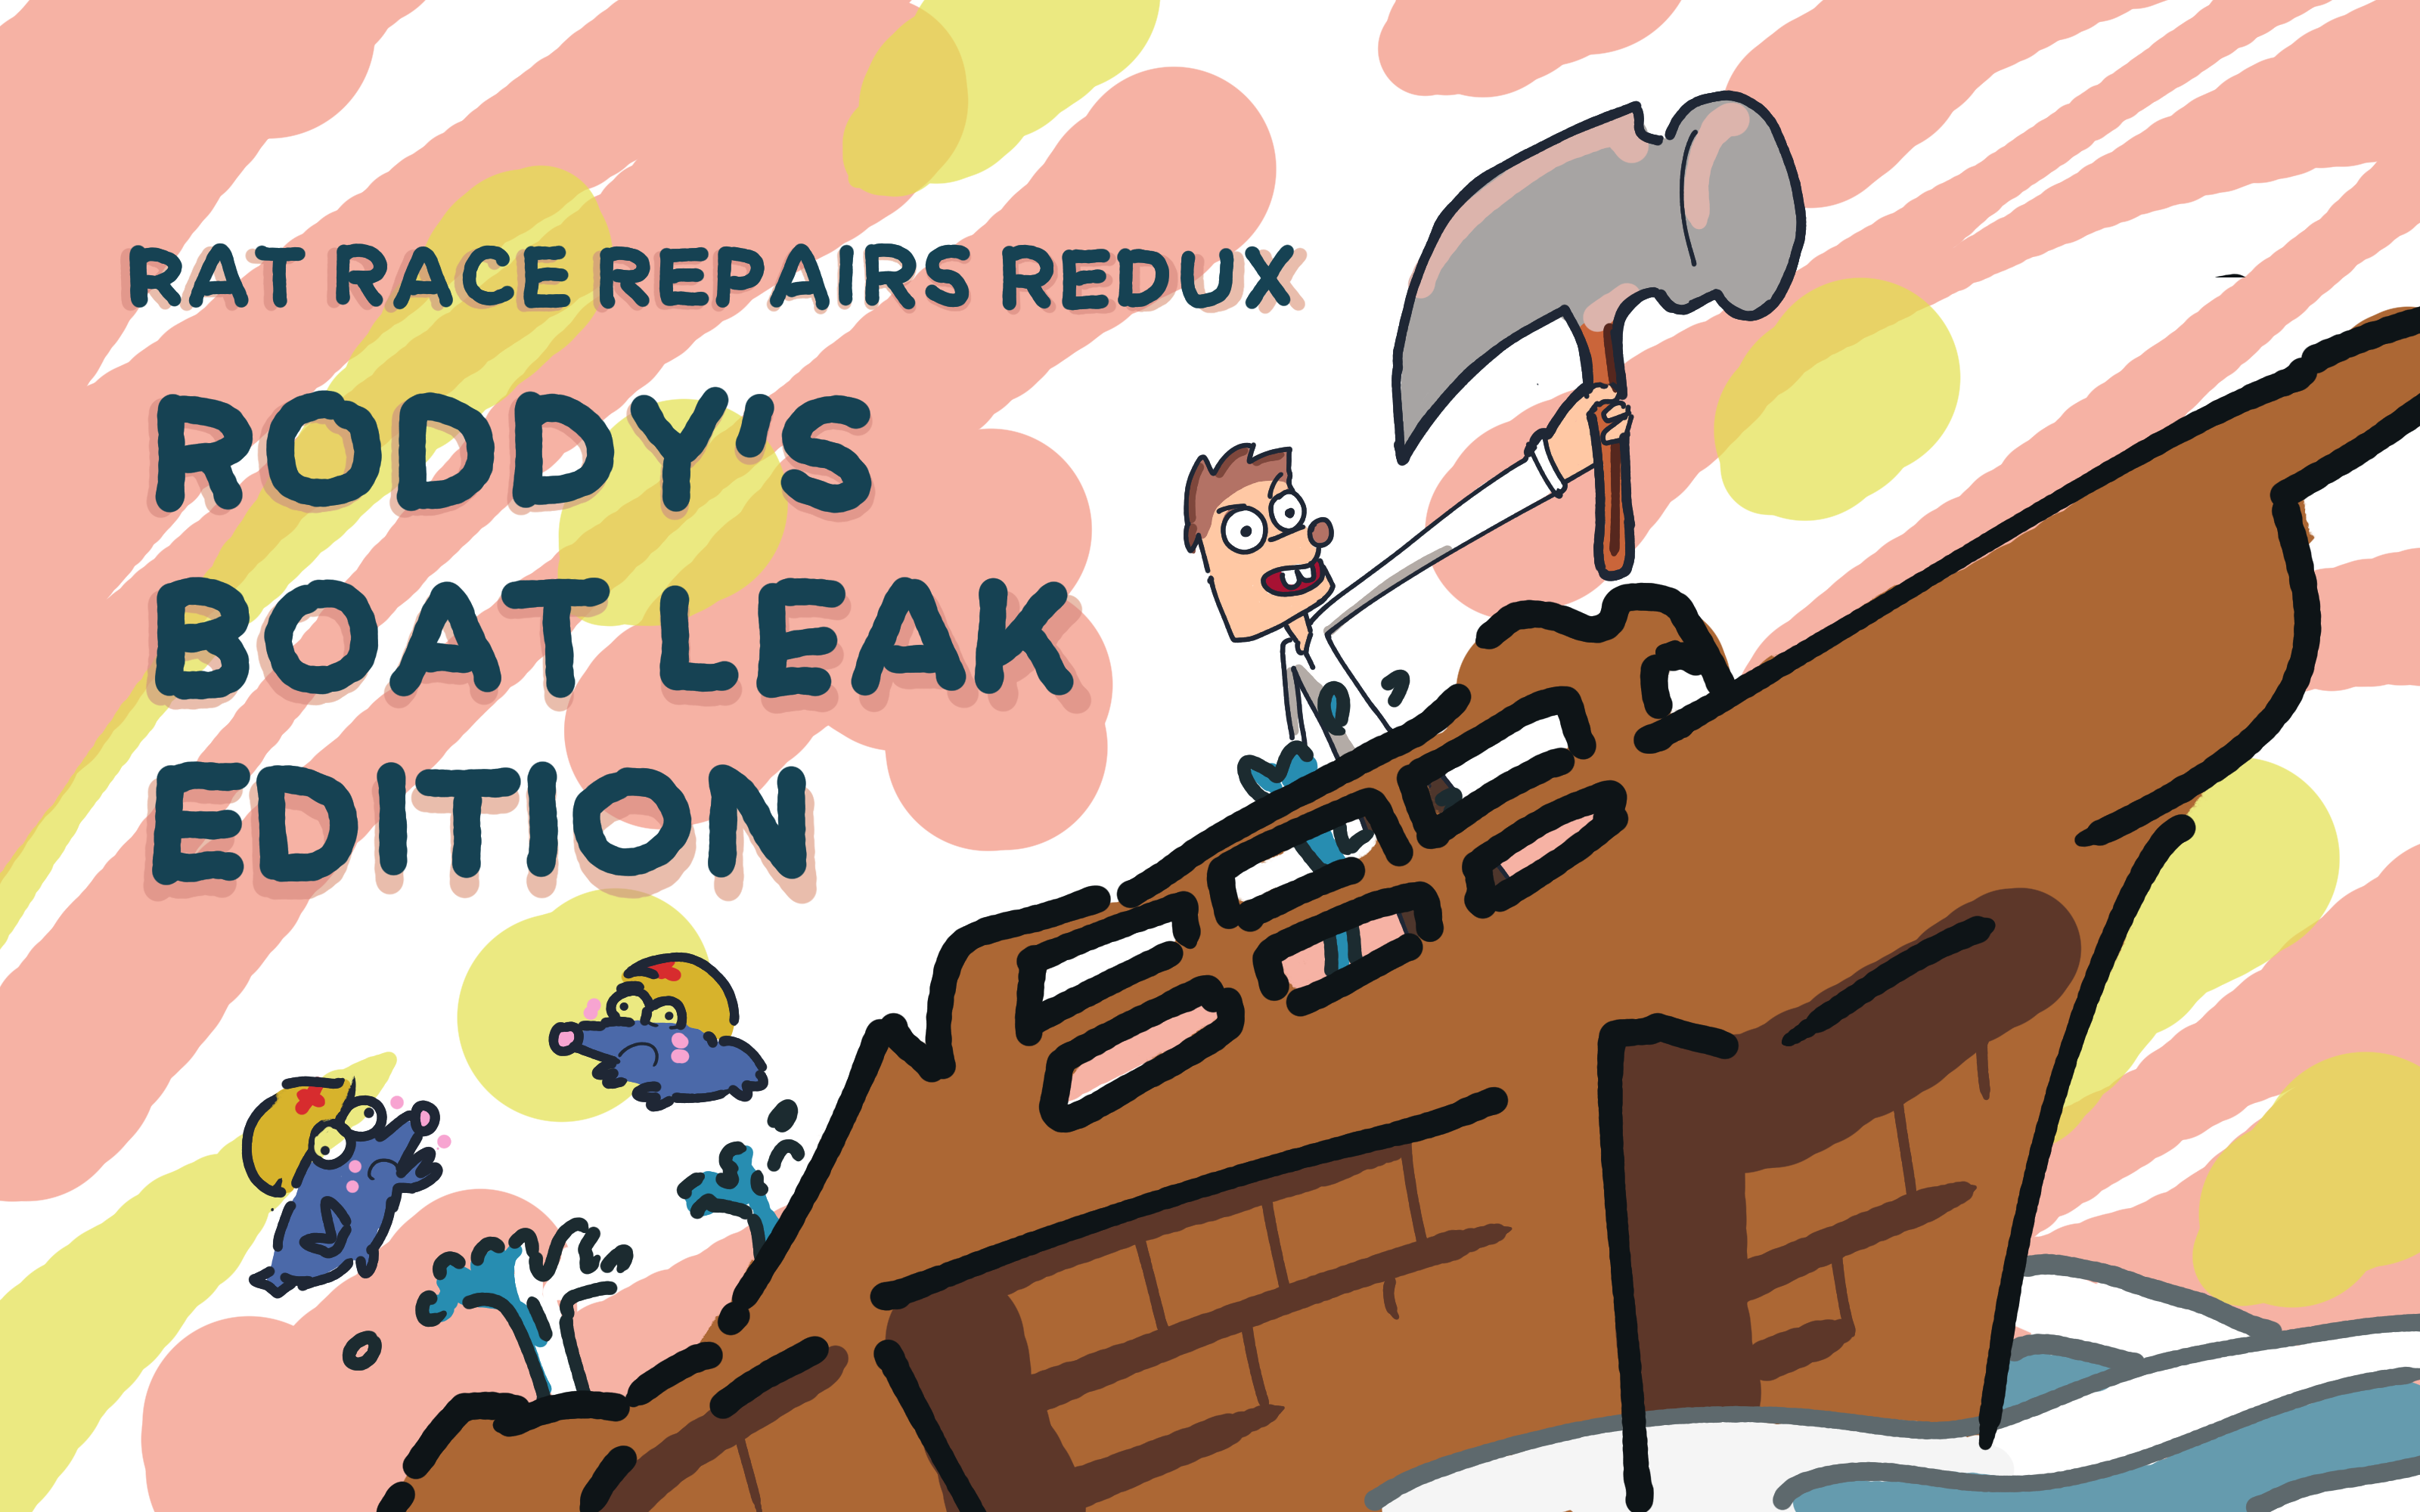 Rat Race Repairs Redux: Roddy's Boat Leak Edition